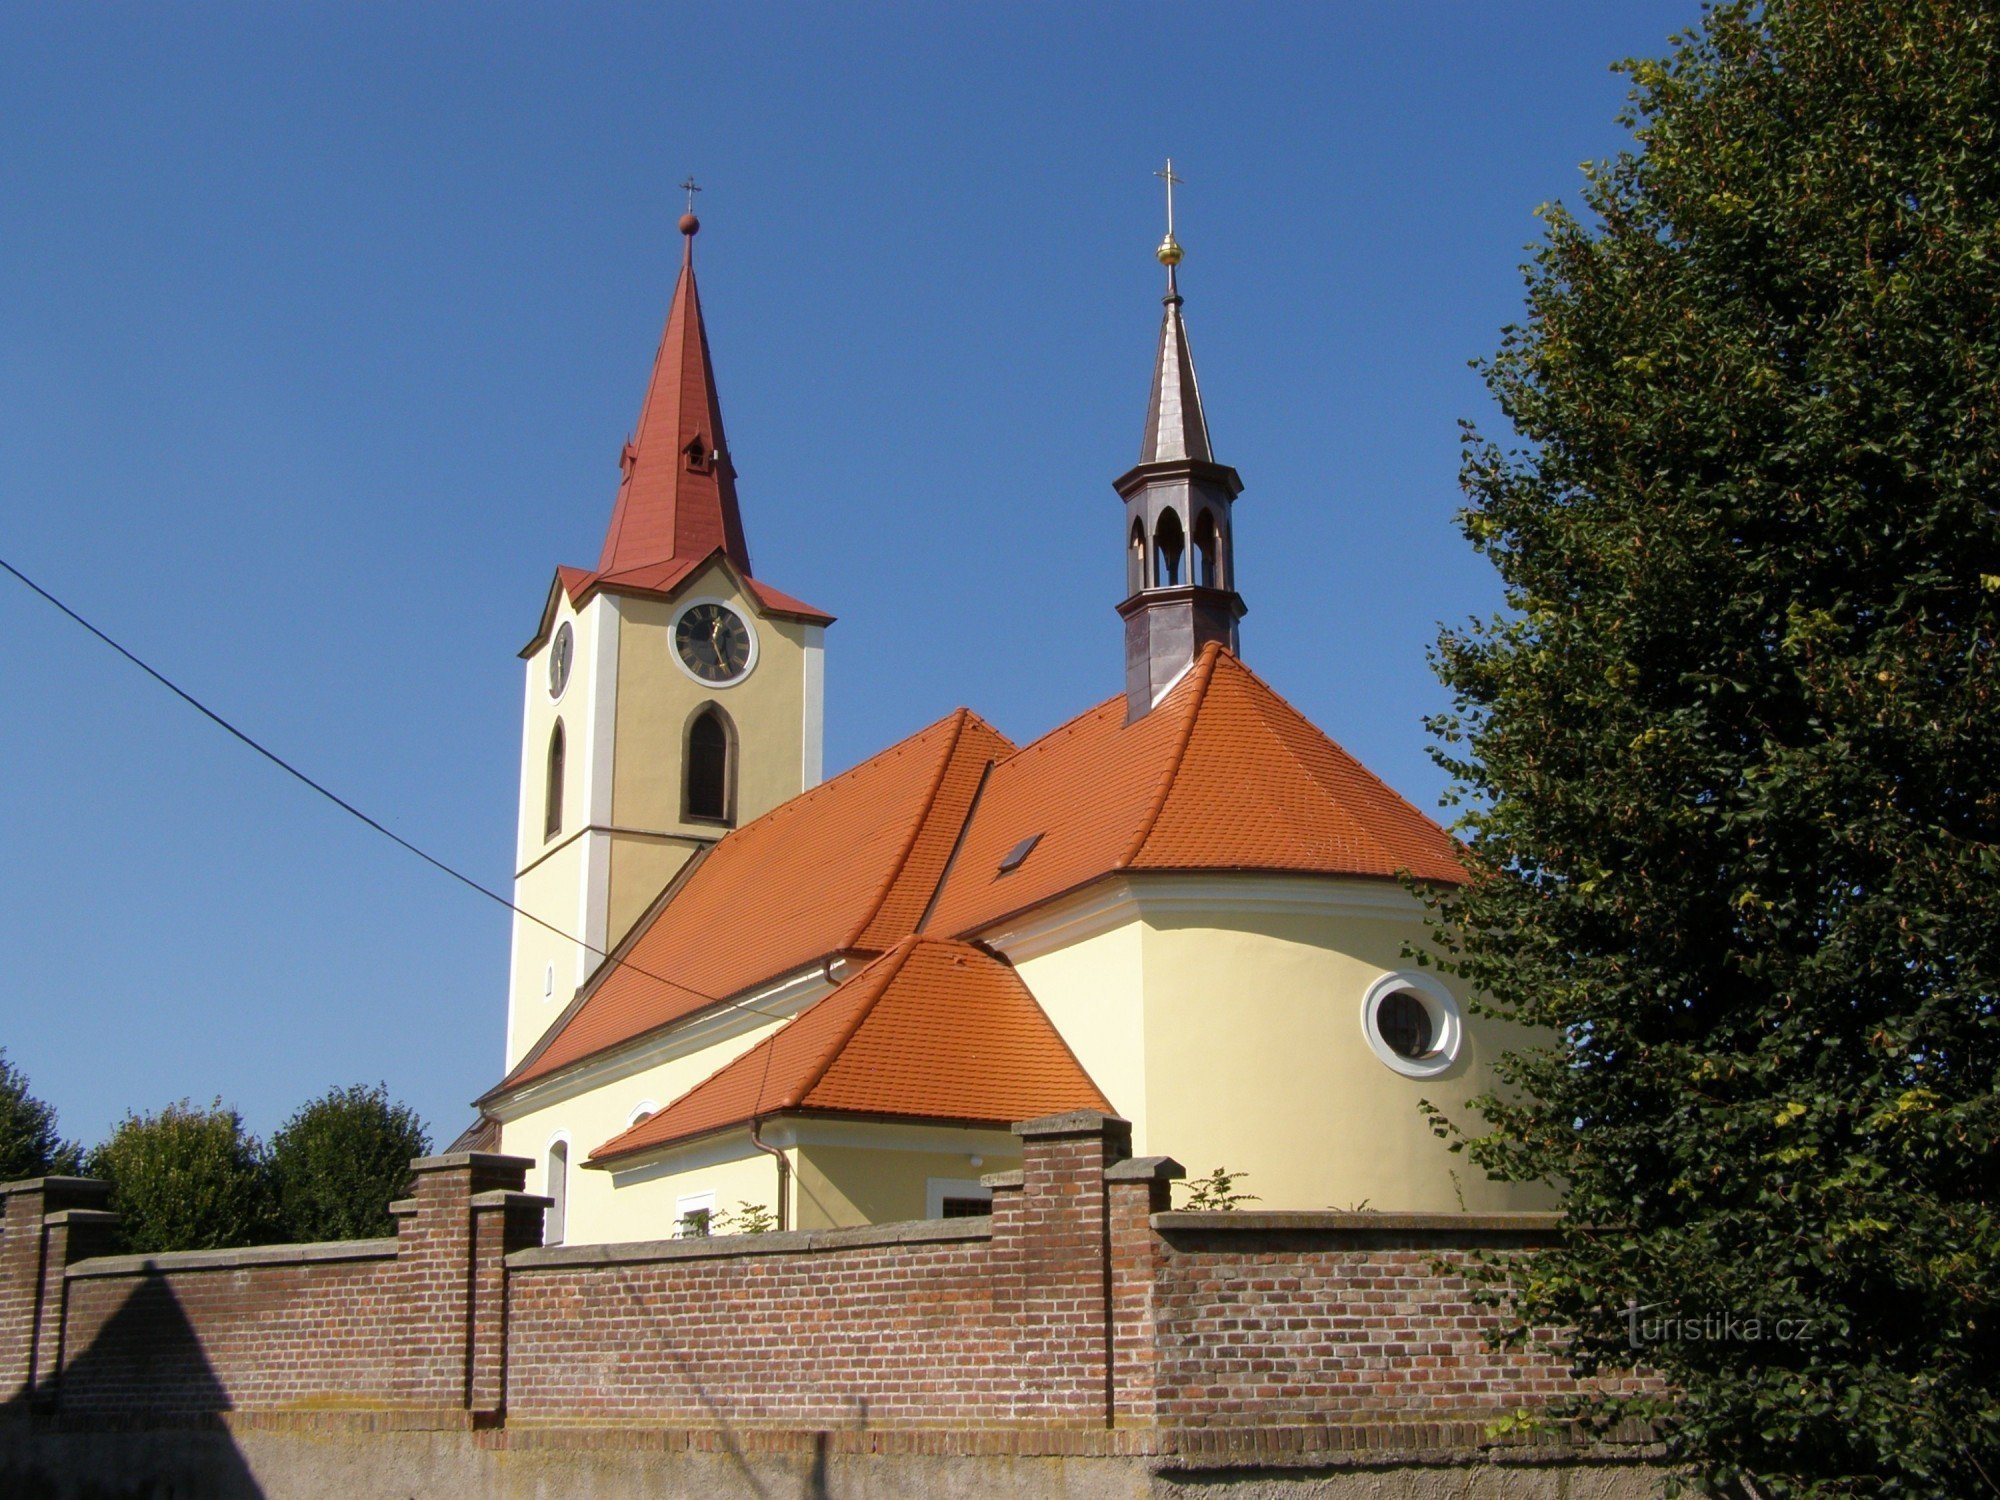 Jasenná - St. George's Church